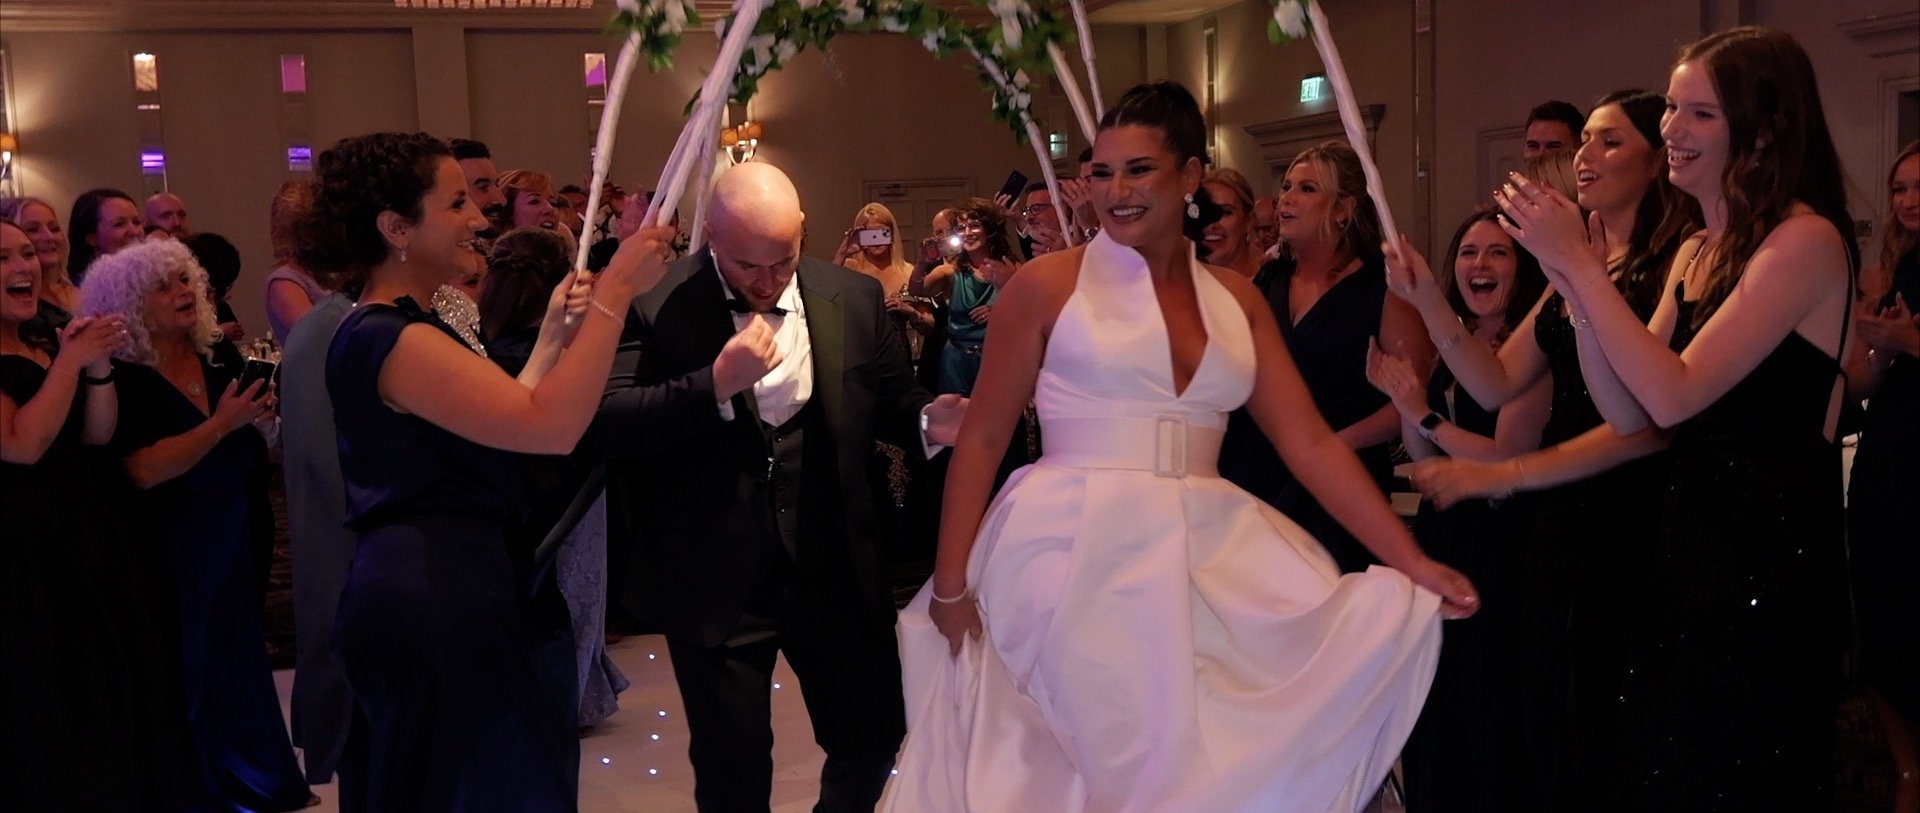 Sopwell House wedding videography - 3 Cheers Media - Jewish wedding.jpg